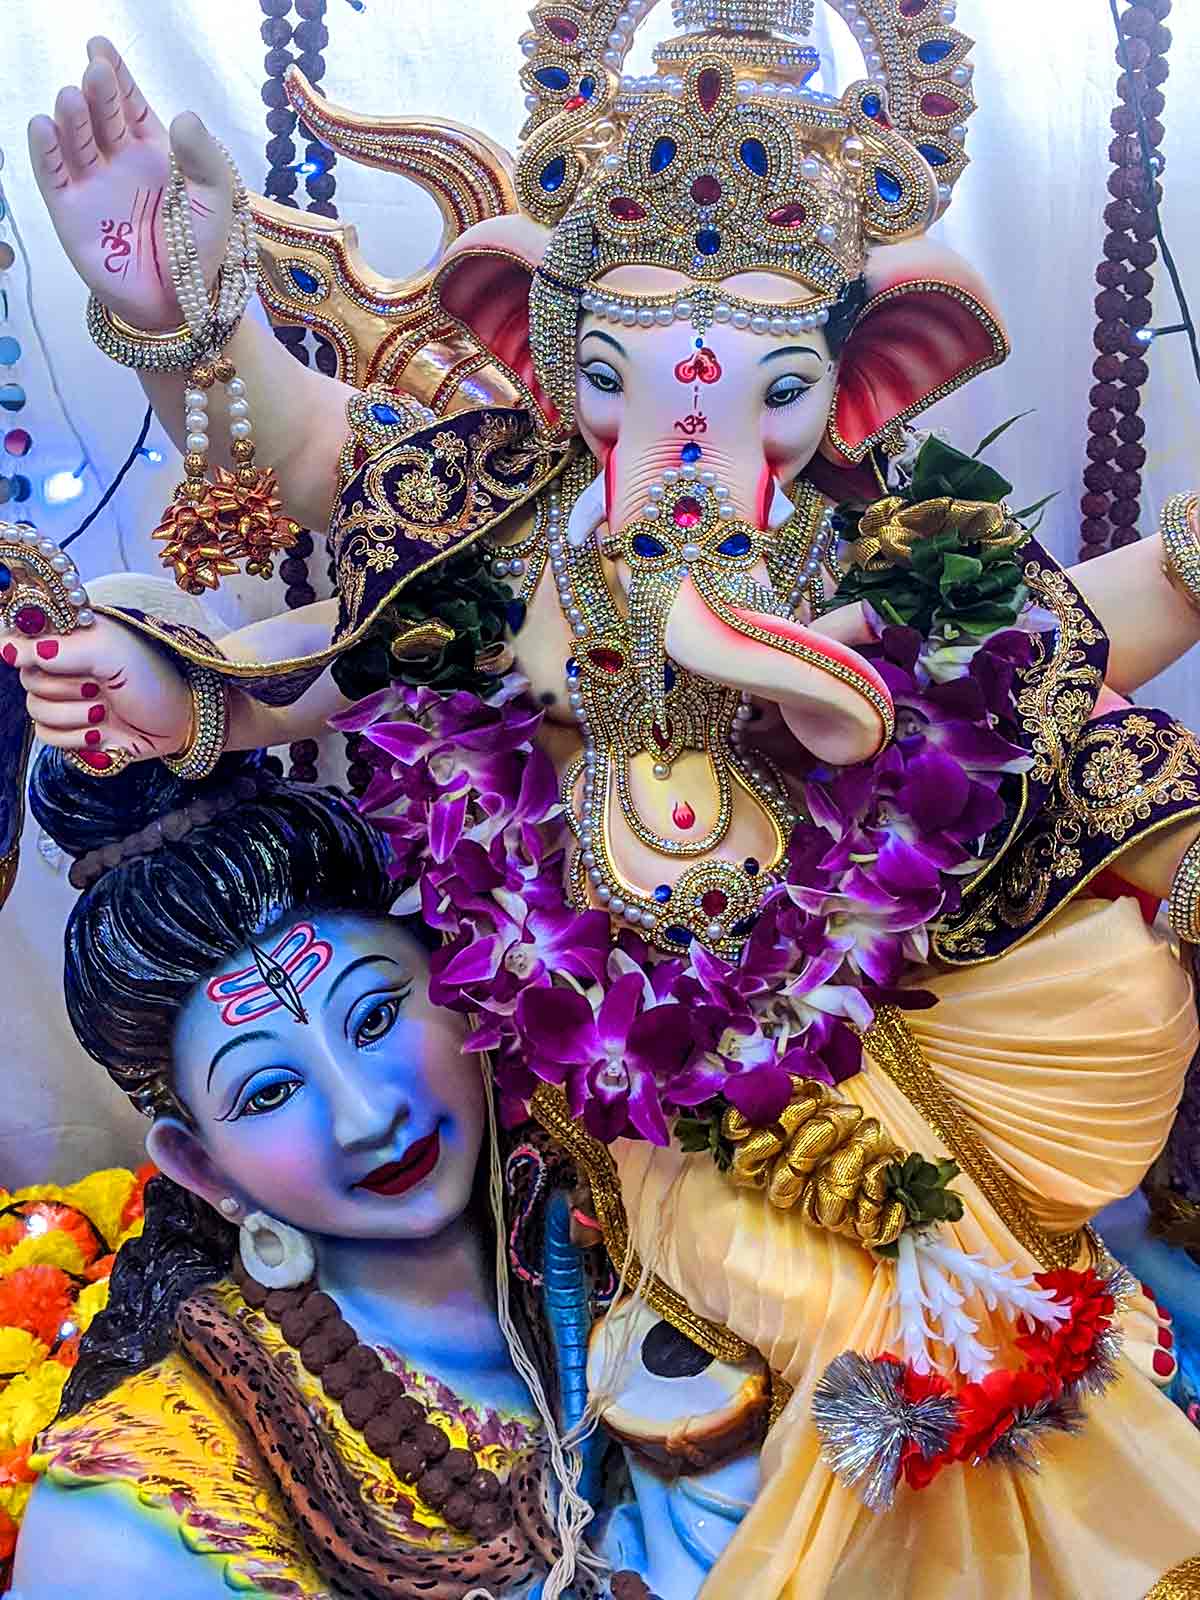 Dubai to Bengaluru, Ganesha brings happiness for all - Rediff.com Get Ahead